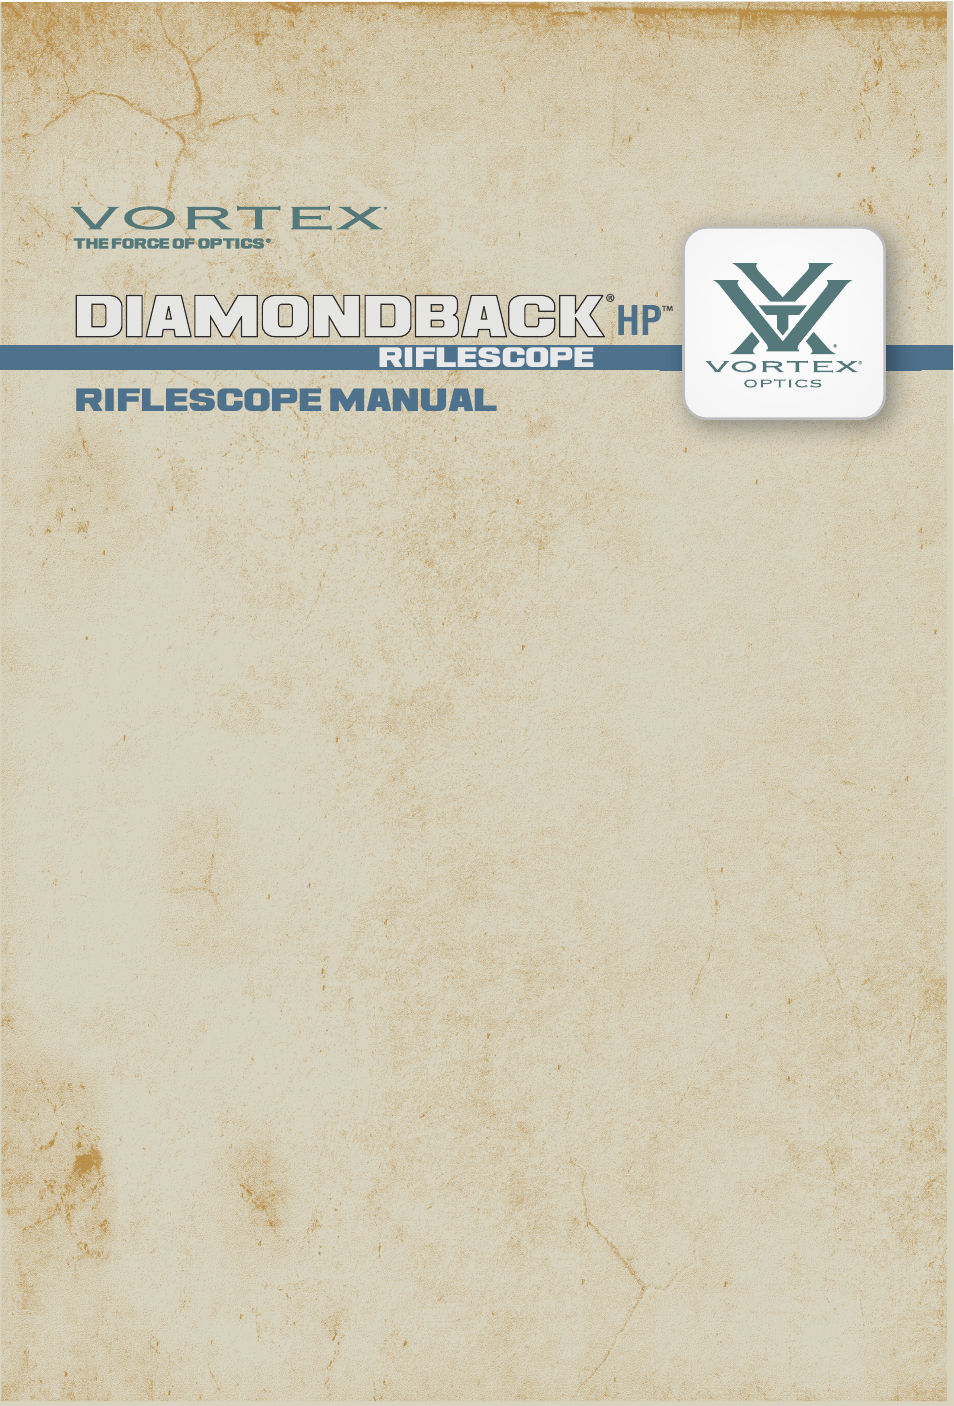 DIAMONDBACK HP 4-16X42 RIFLESCOPE